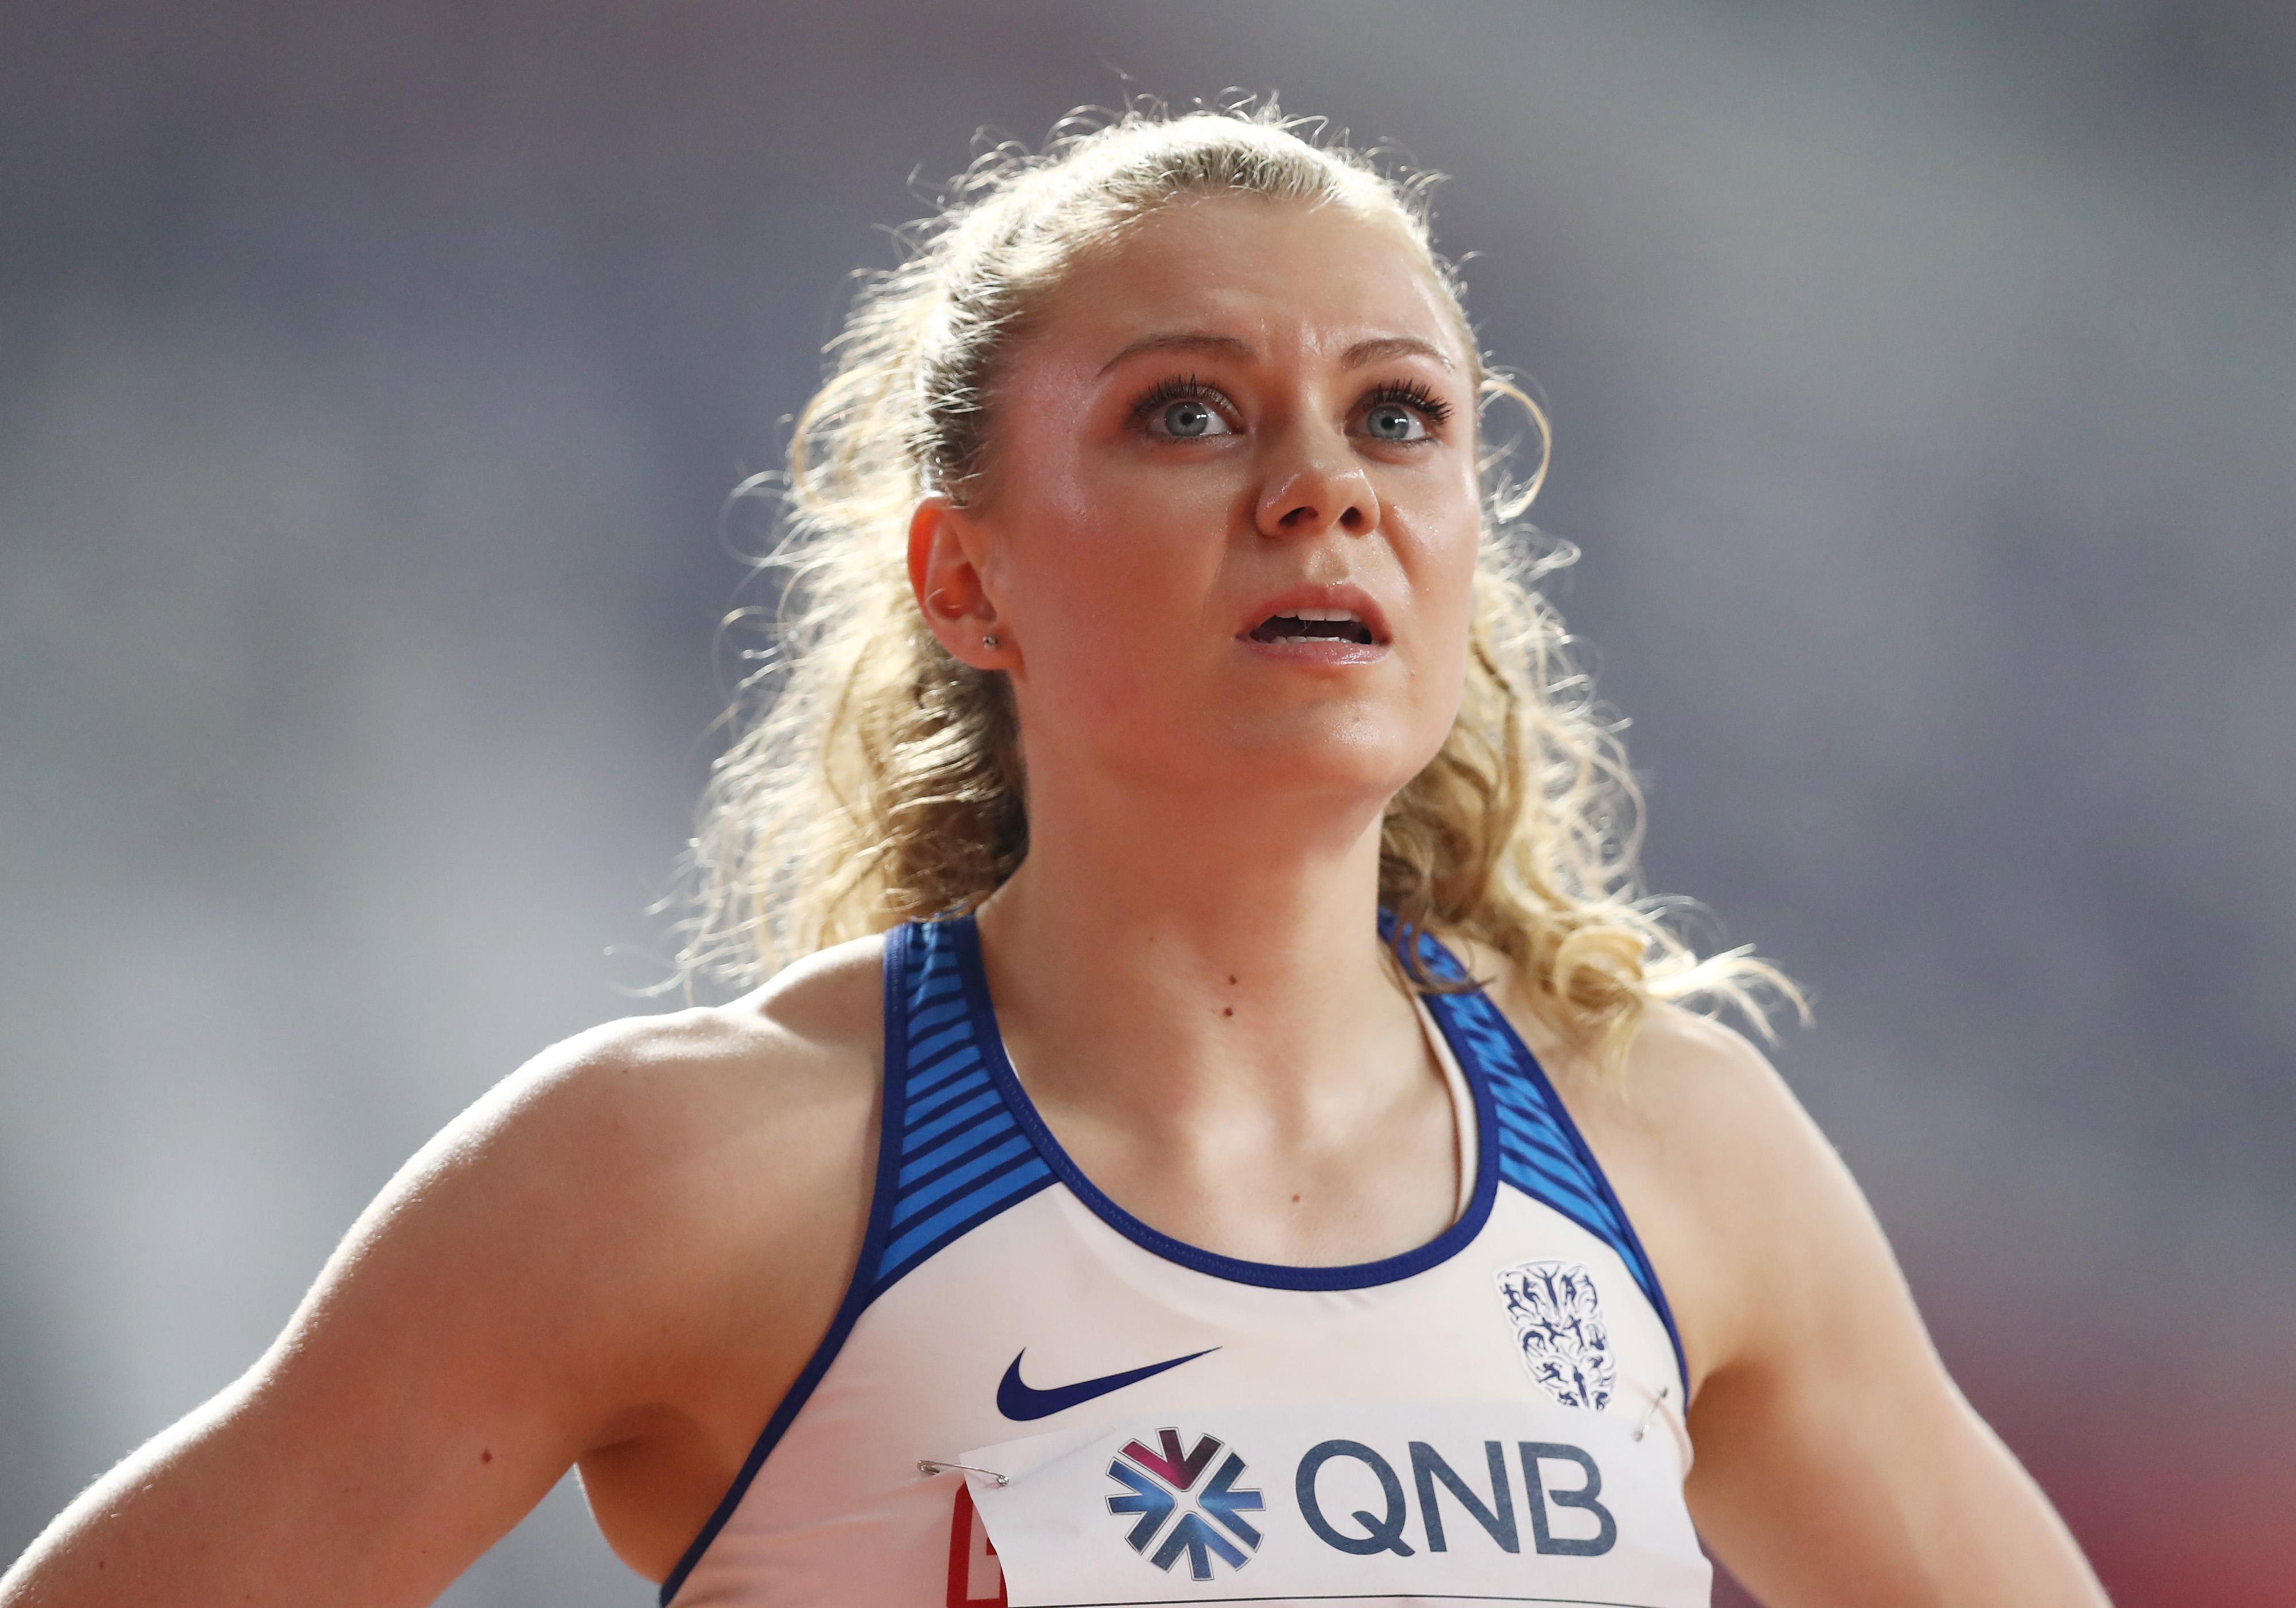 Beth Dobbin reaches 200m semi-finals at World Athletics Championships